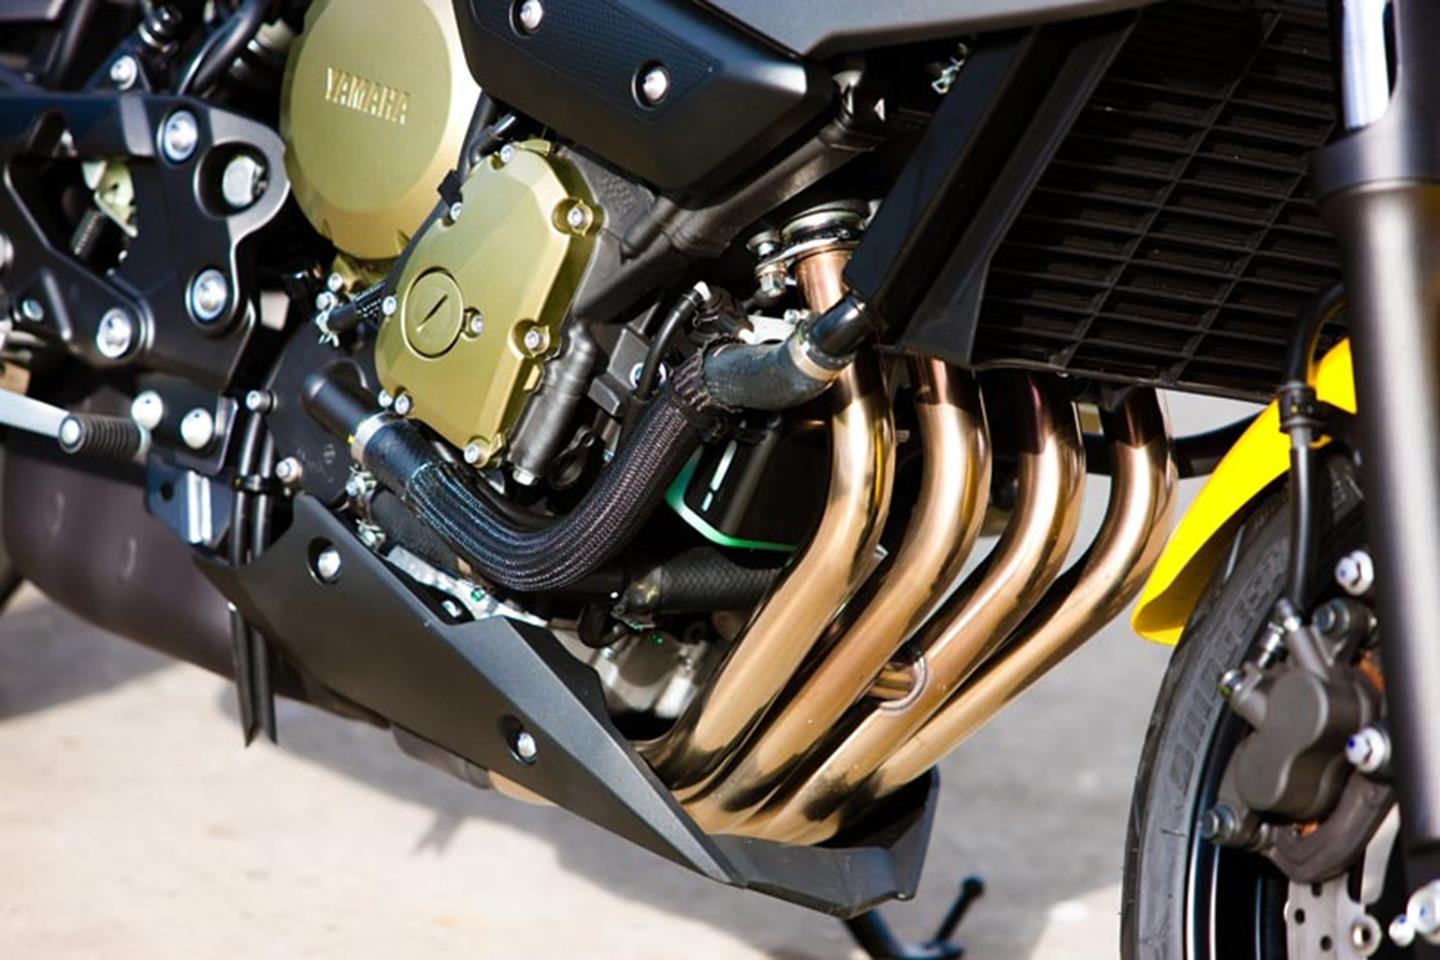 Moto GP Rain Cover To Fit Yamaha XJ6 XJ8 R1 R6 Thundercat Sports Bike